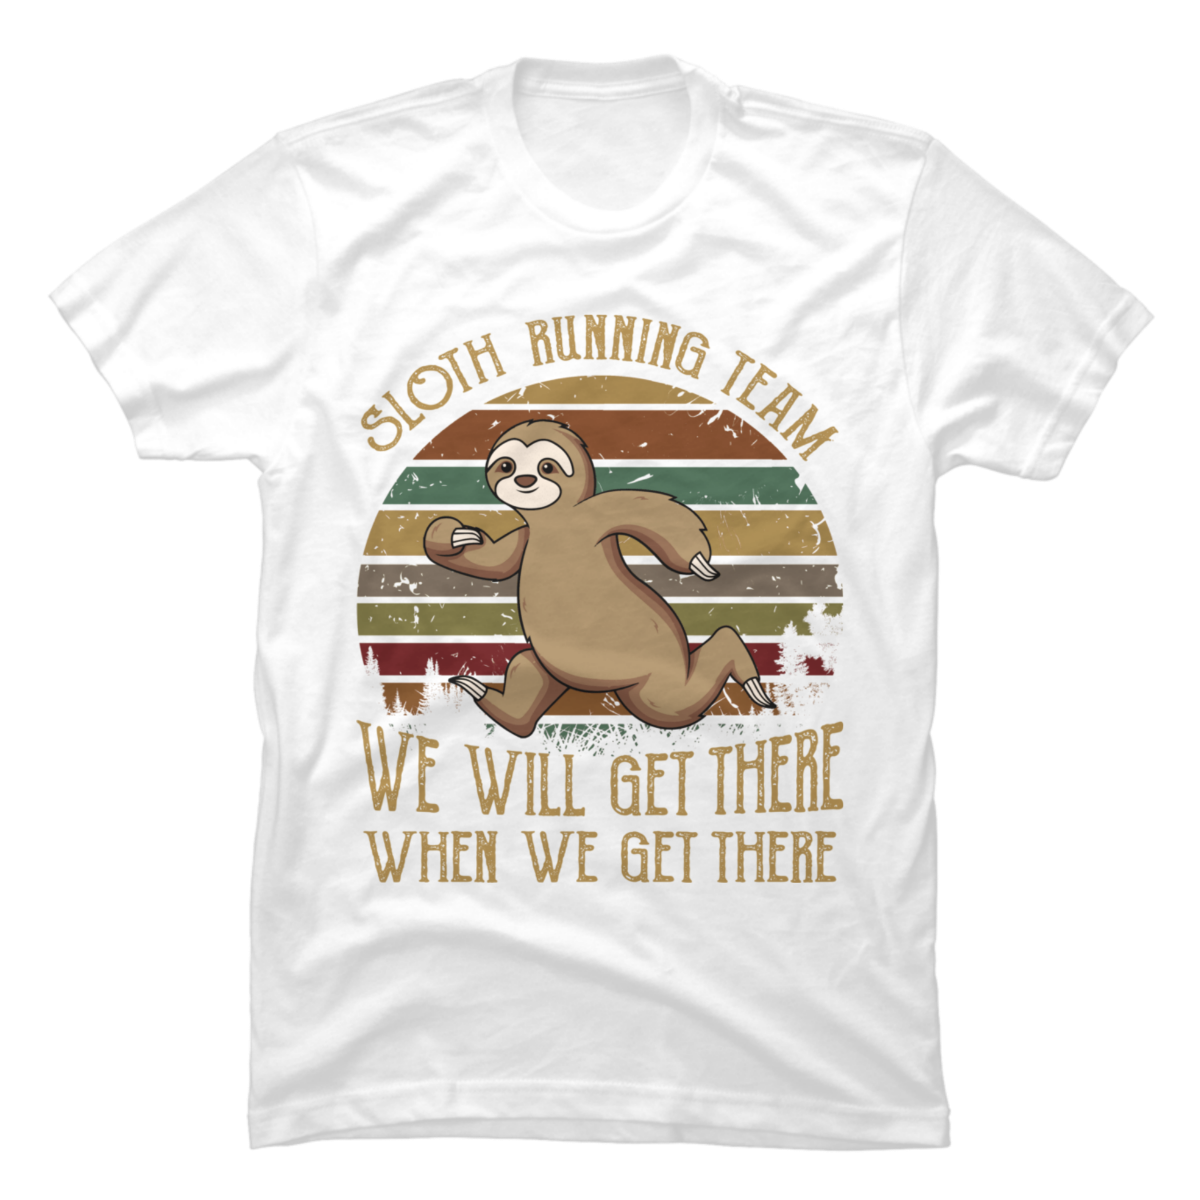 sloth running team shirt